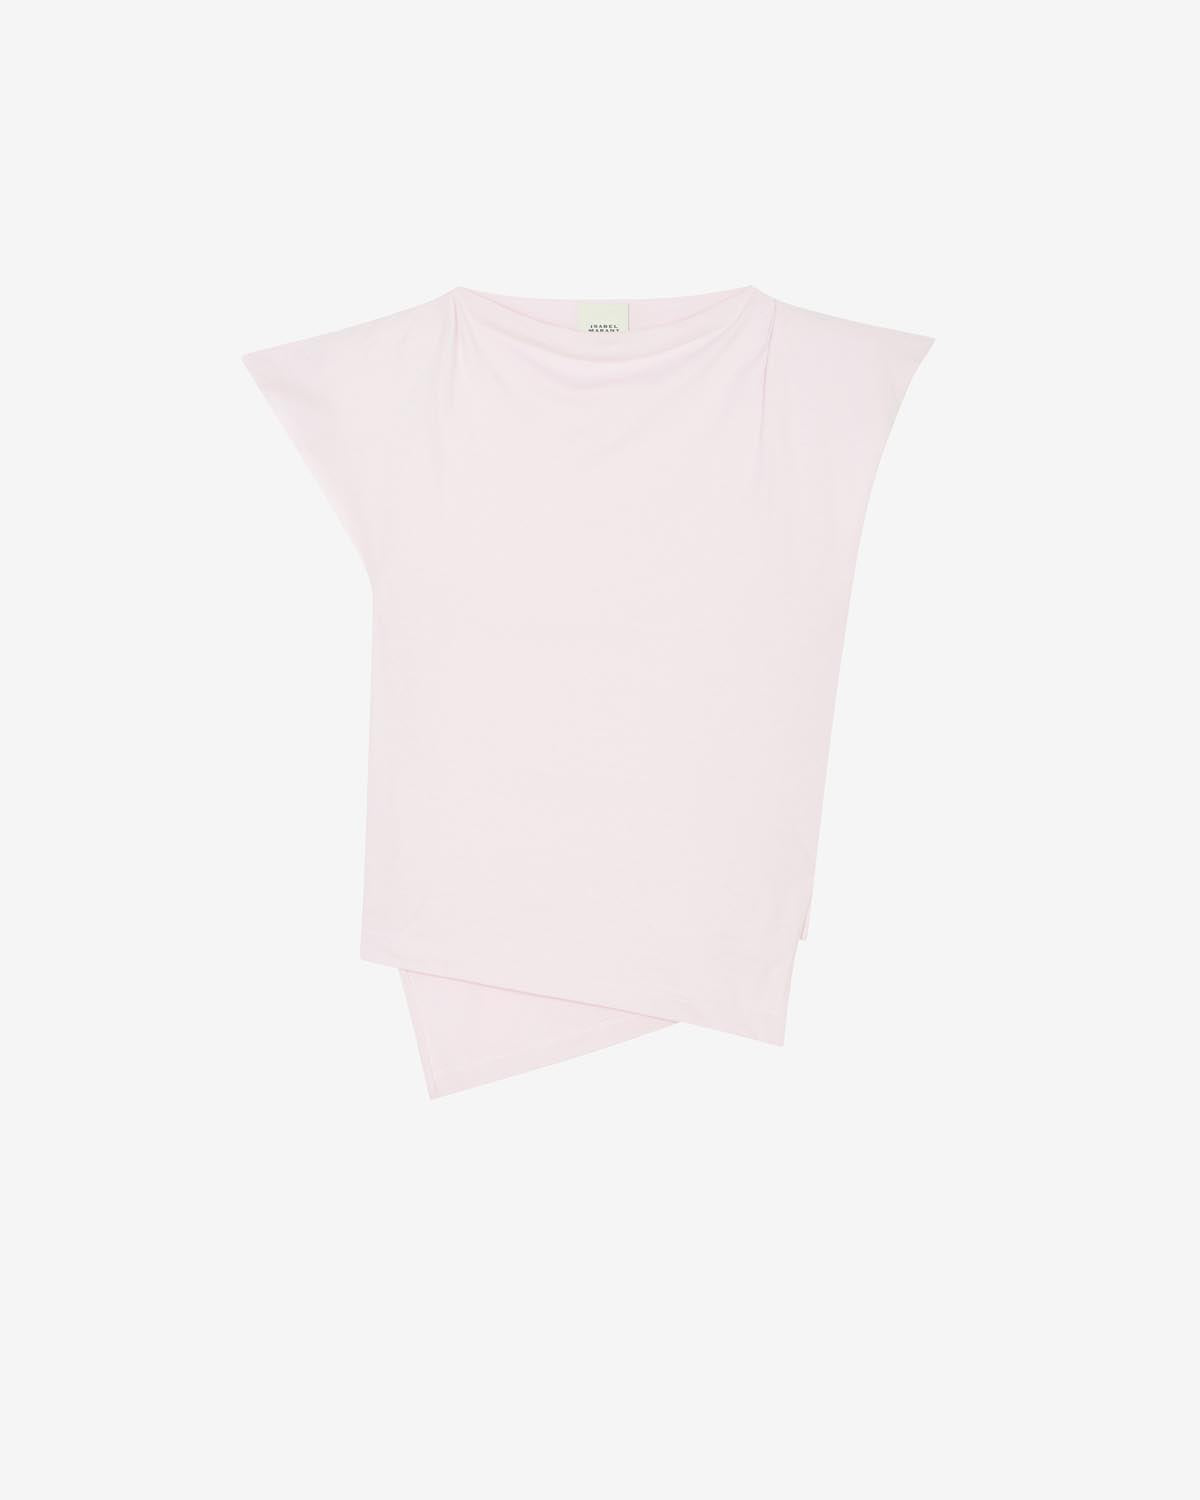 Sebani ティーシャツ Woman Light pink 5